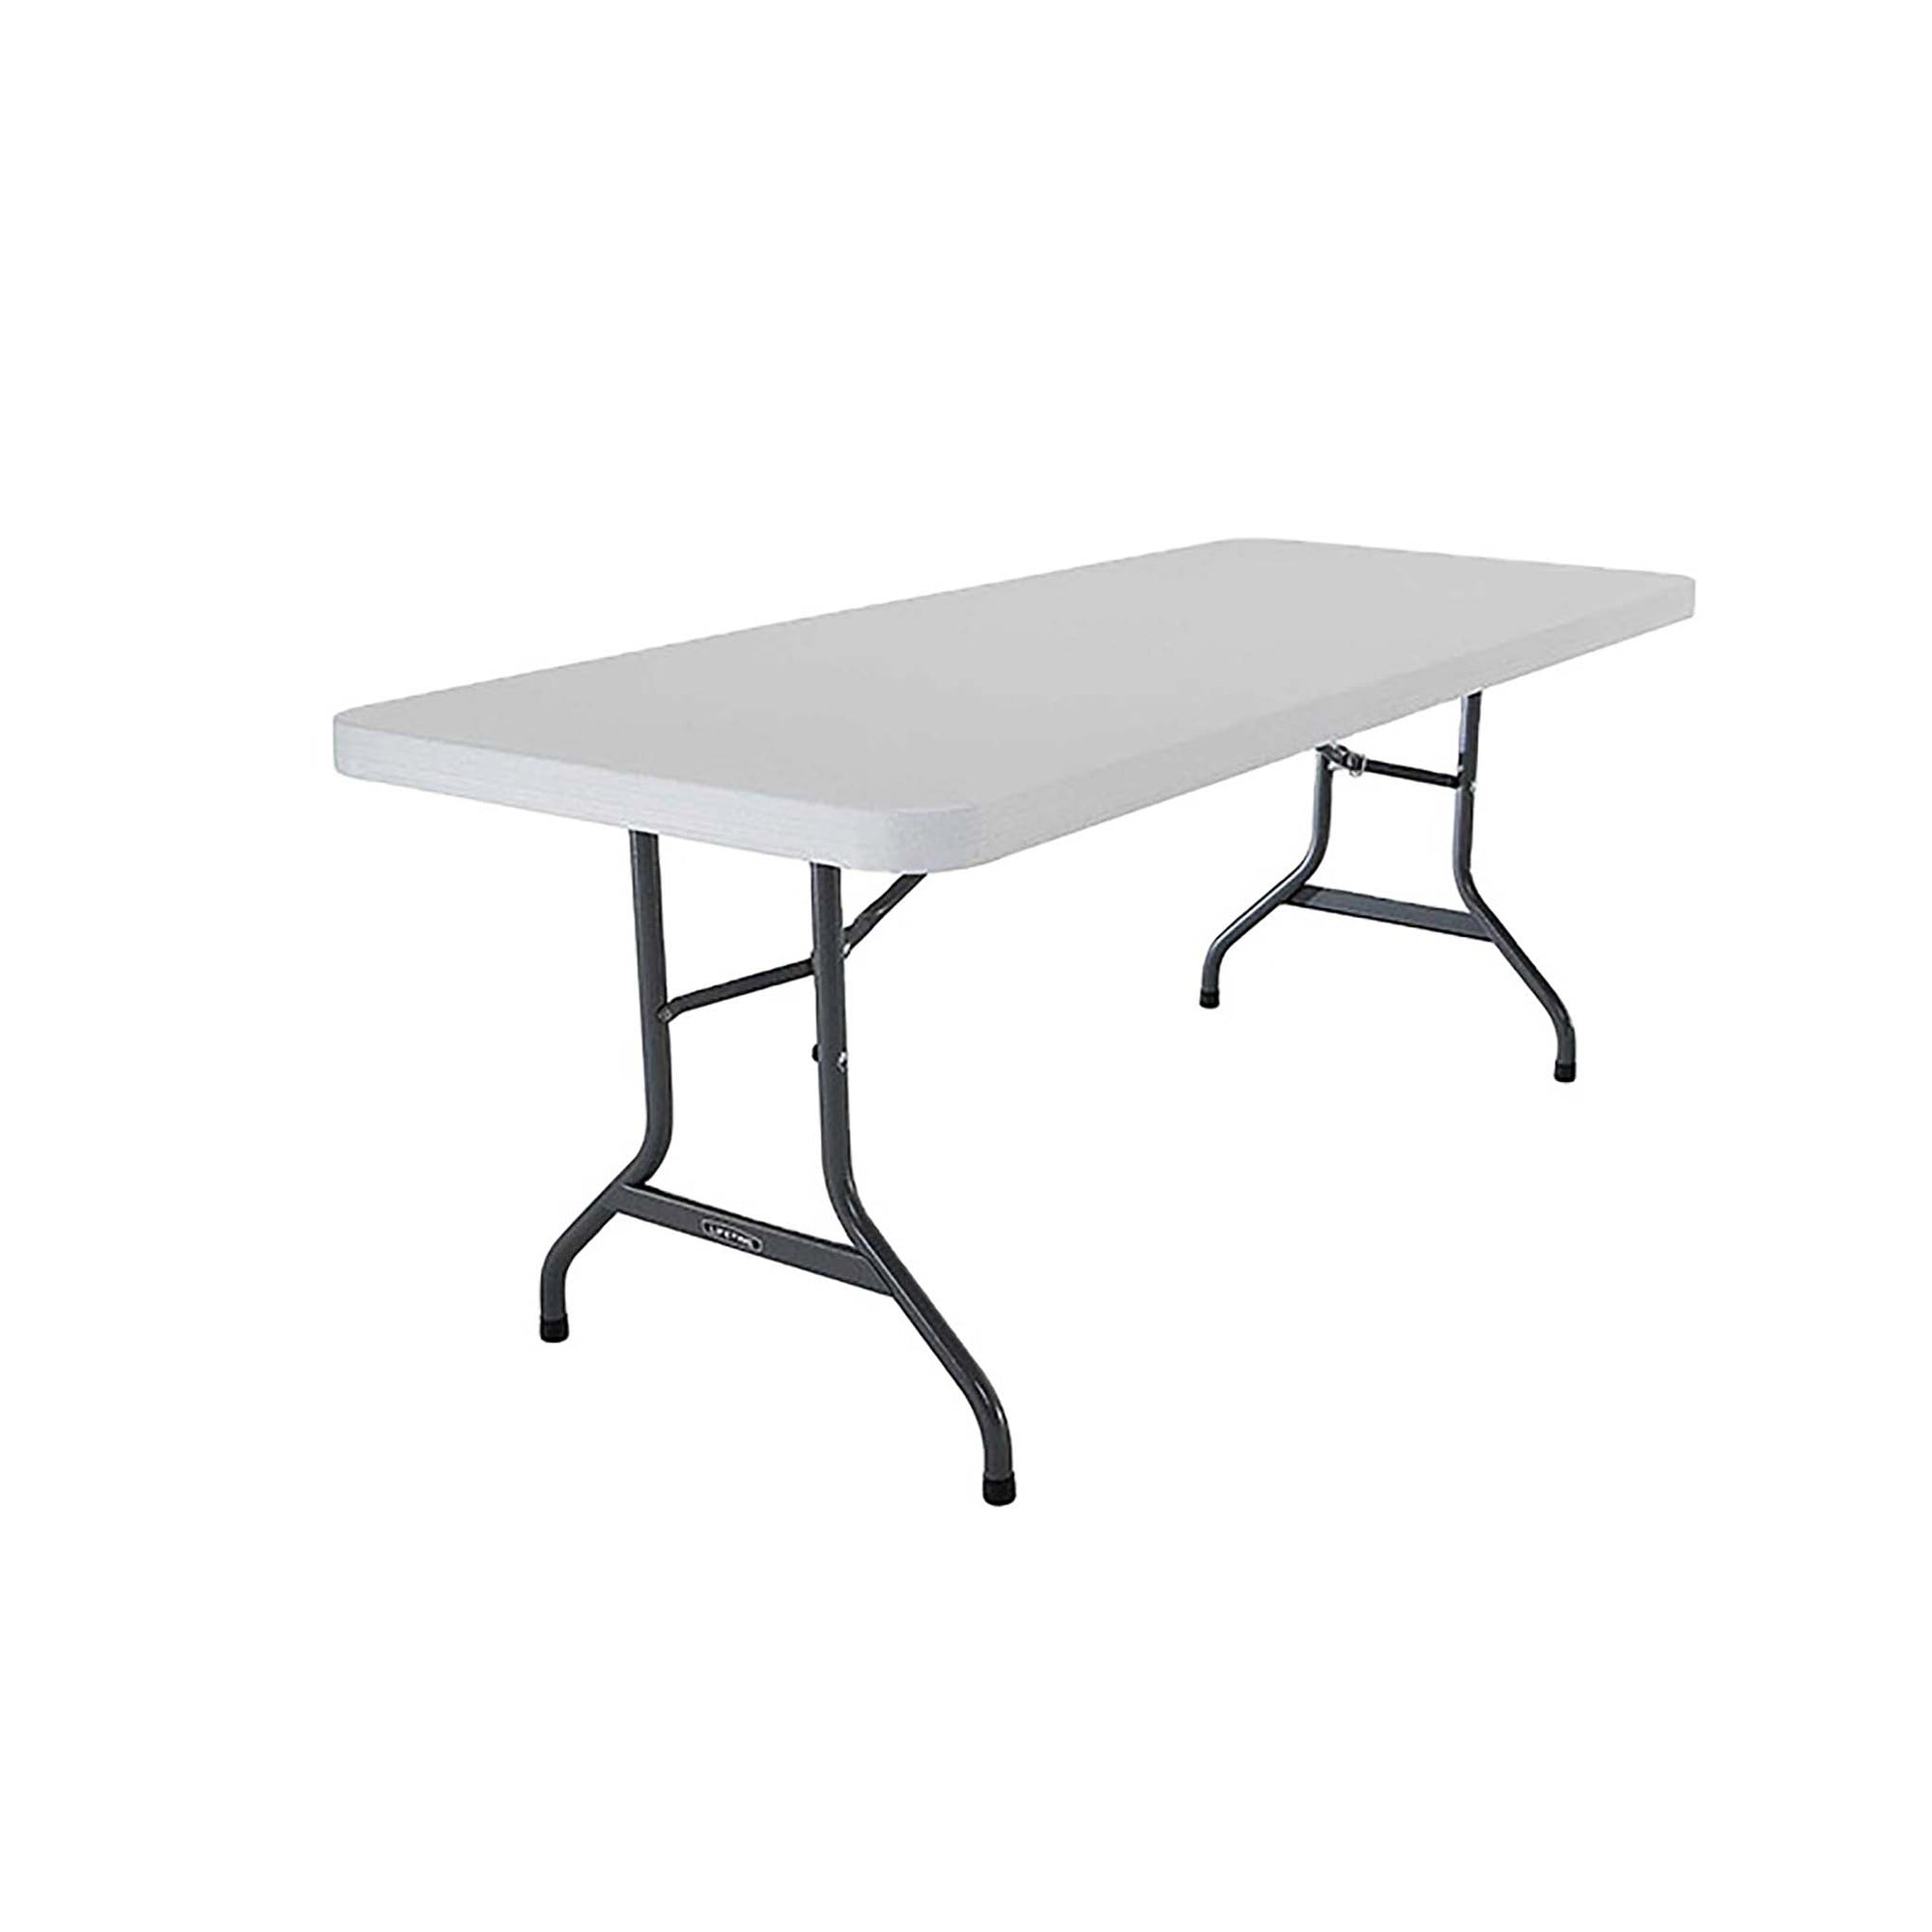 Rectangular table plastic or wood